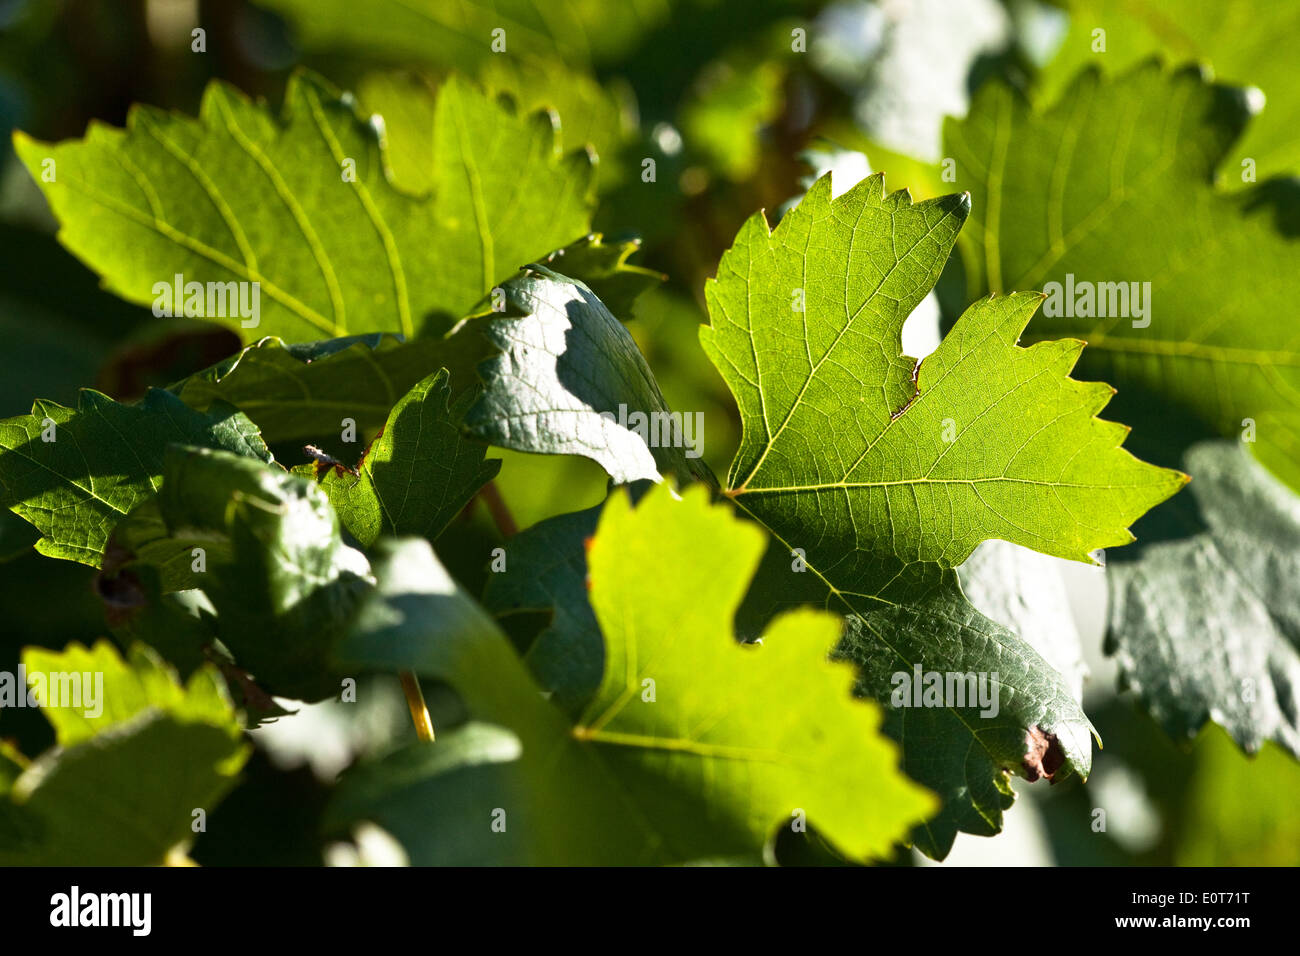 Weinlaub - foliage of vines Stock Photo